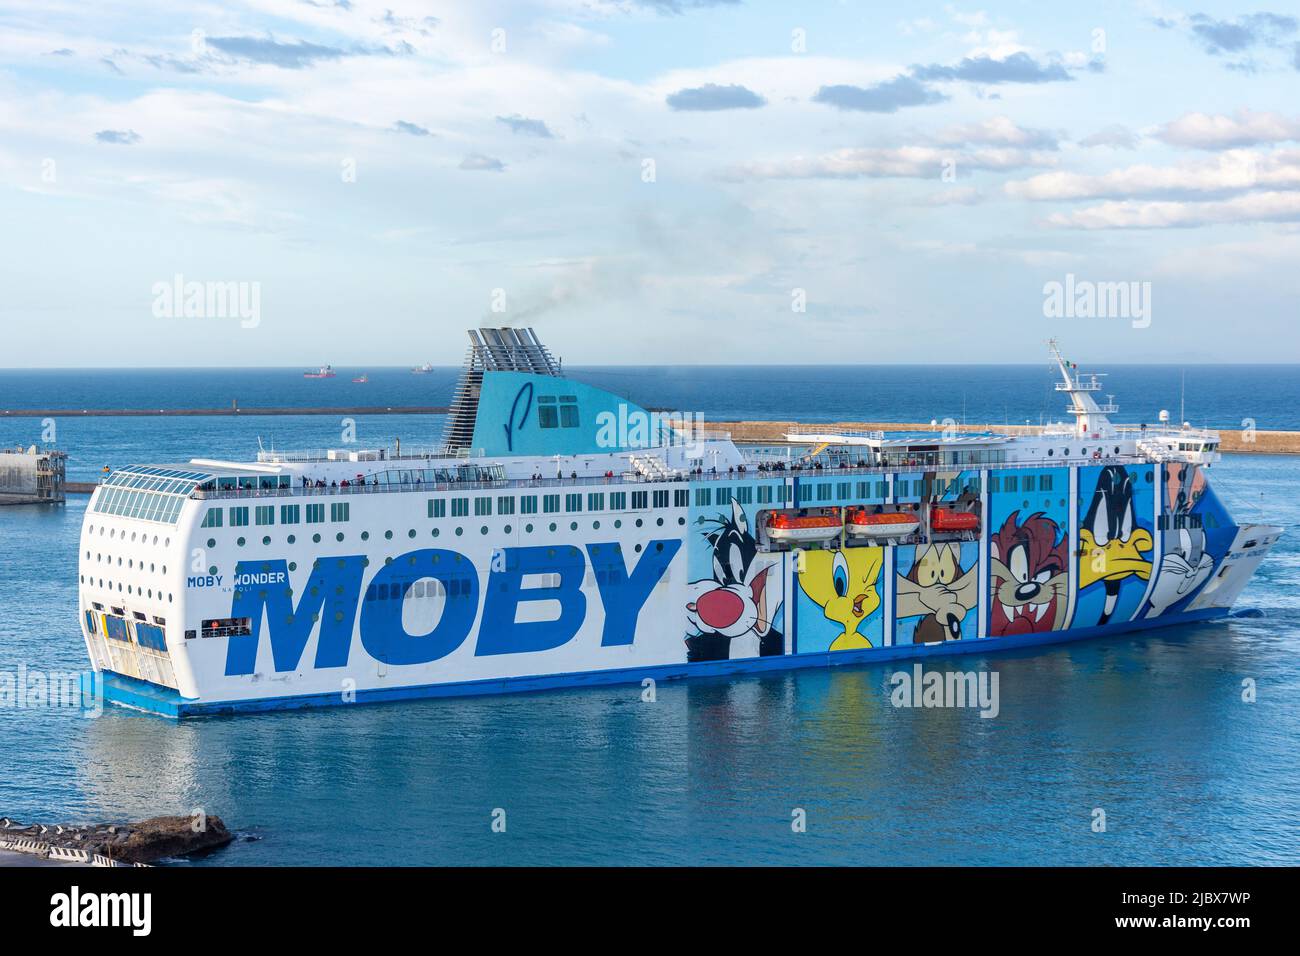 Moby Wonder ferry boat in Port of Livorno, Livorno, Tuscany Region, Italy Stock Photo